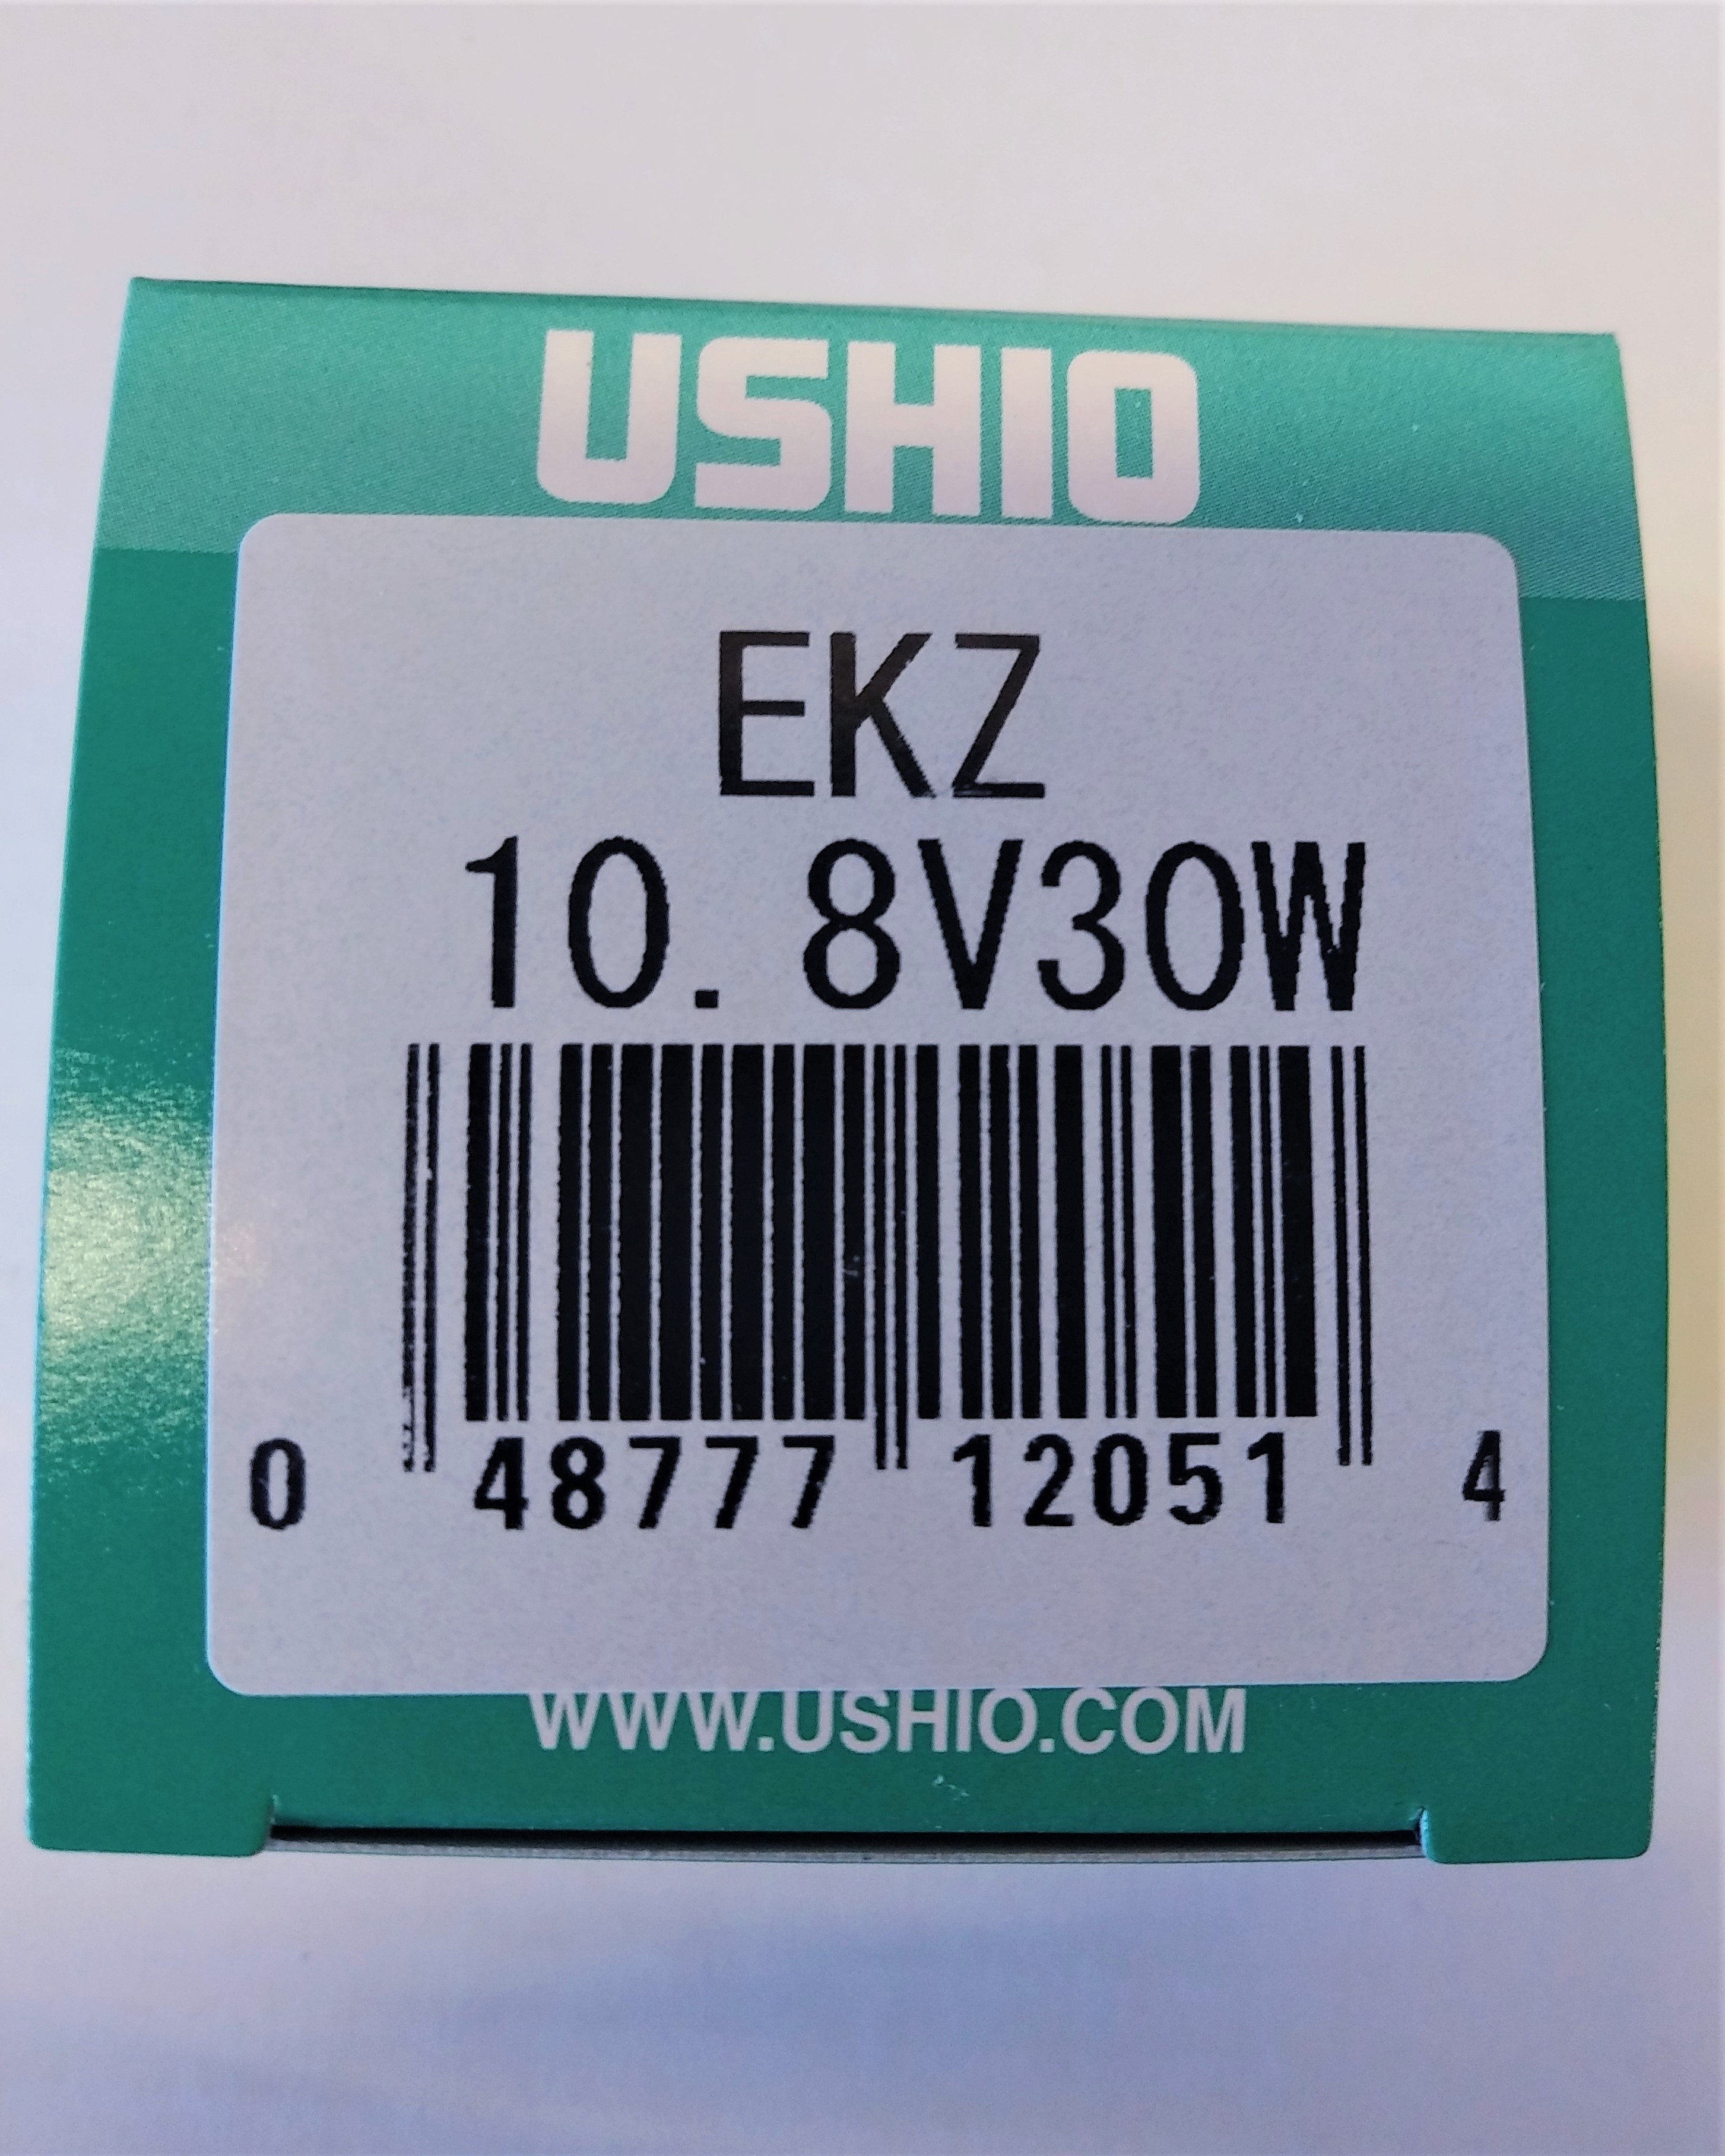 USHIO Halogen Reflector Lamp EKZ 10. 8V30W